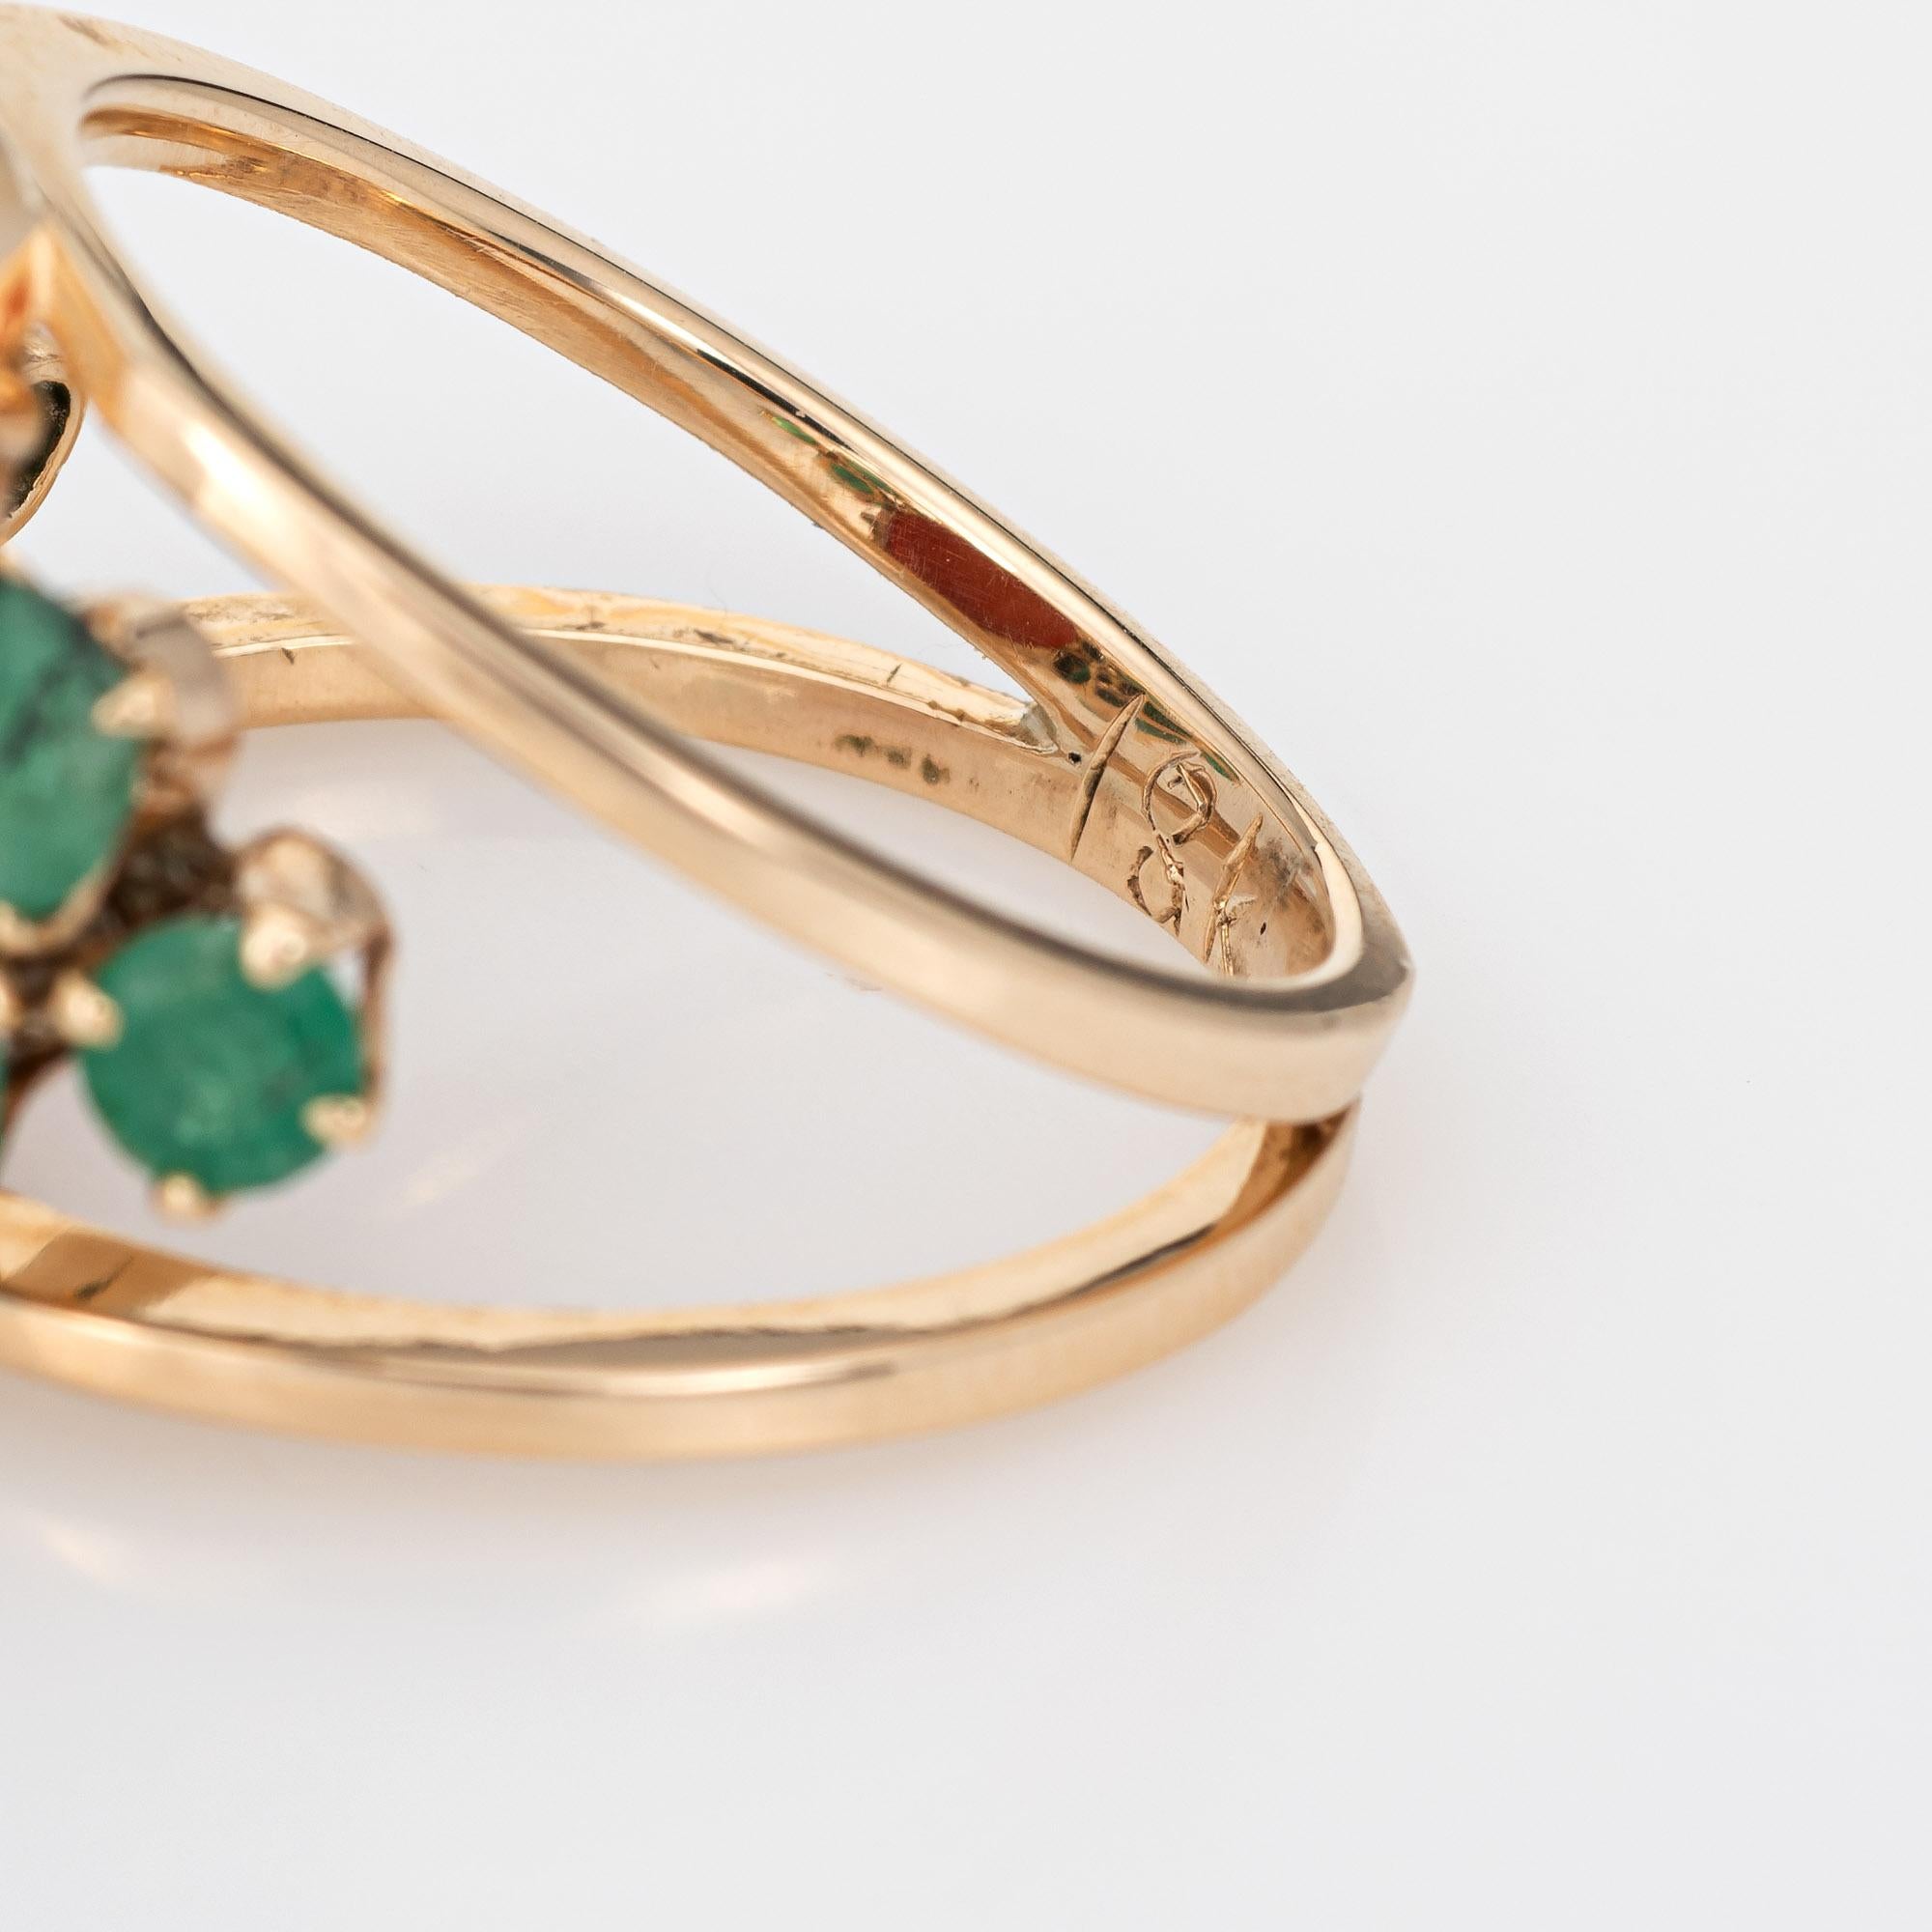 Apricot Coral Emerald Ring Vintage 18 Karat Yellow Gold Estate Fine Jewelry 1